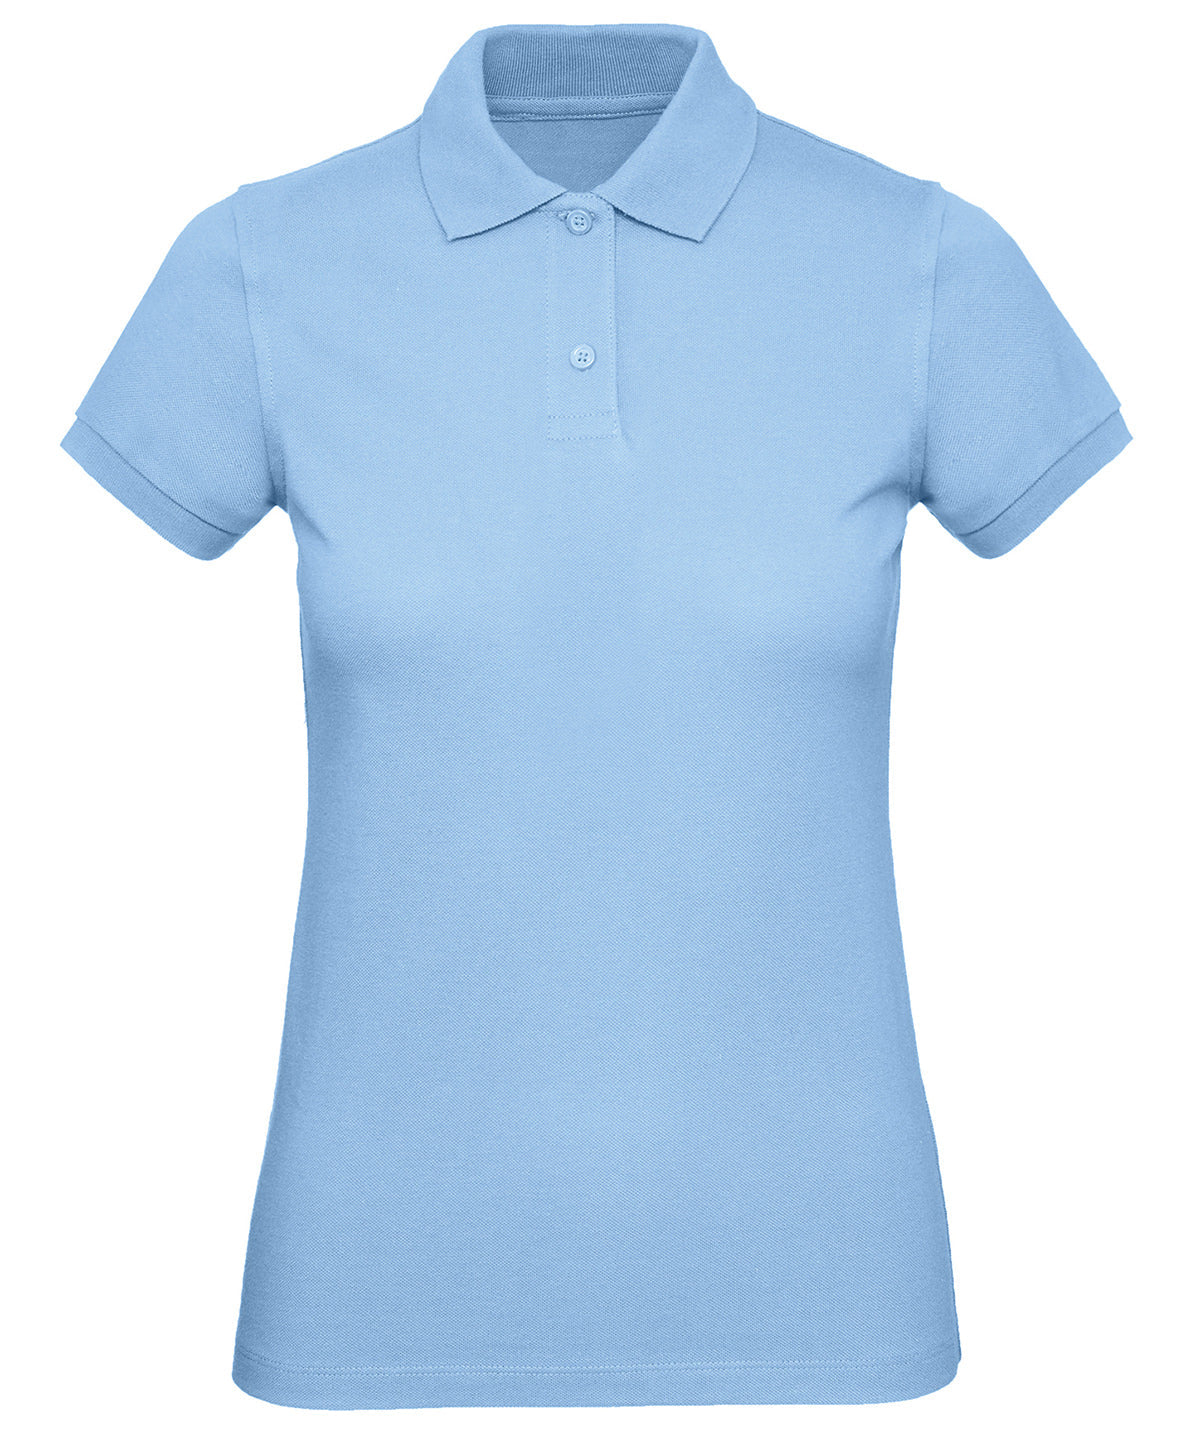 B&C Collection Inspire Polo Women - Sky Blue